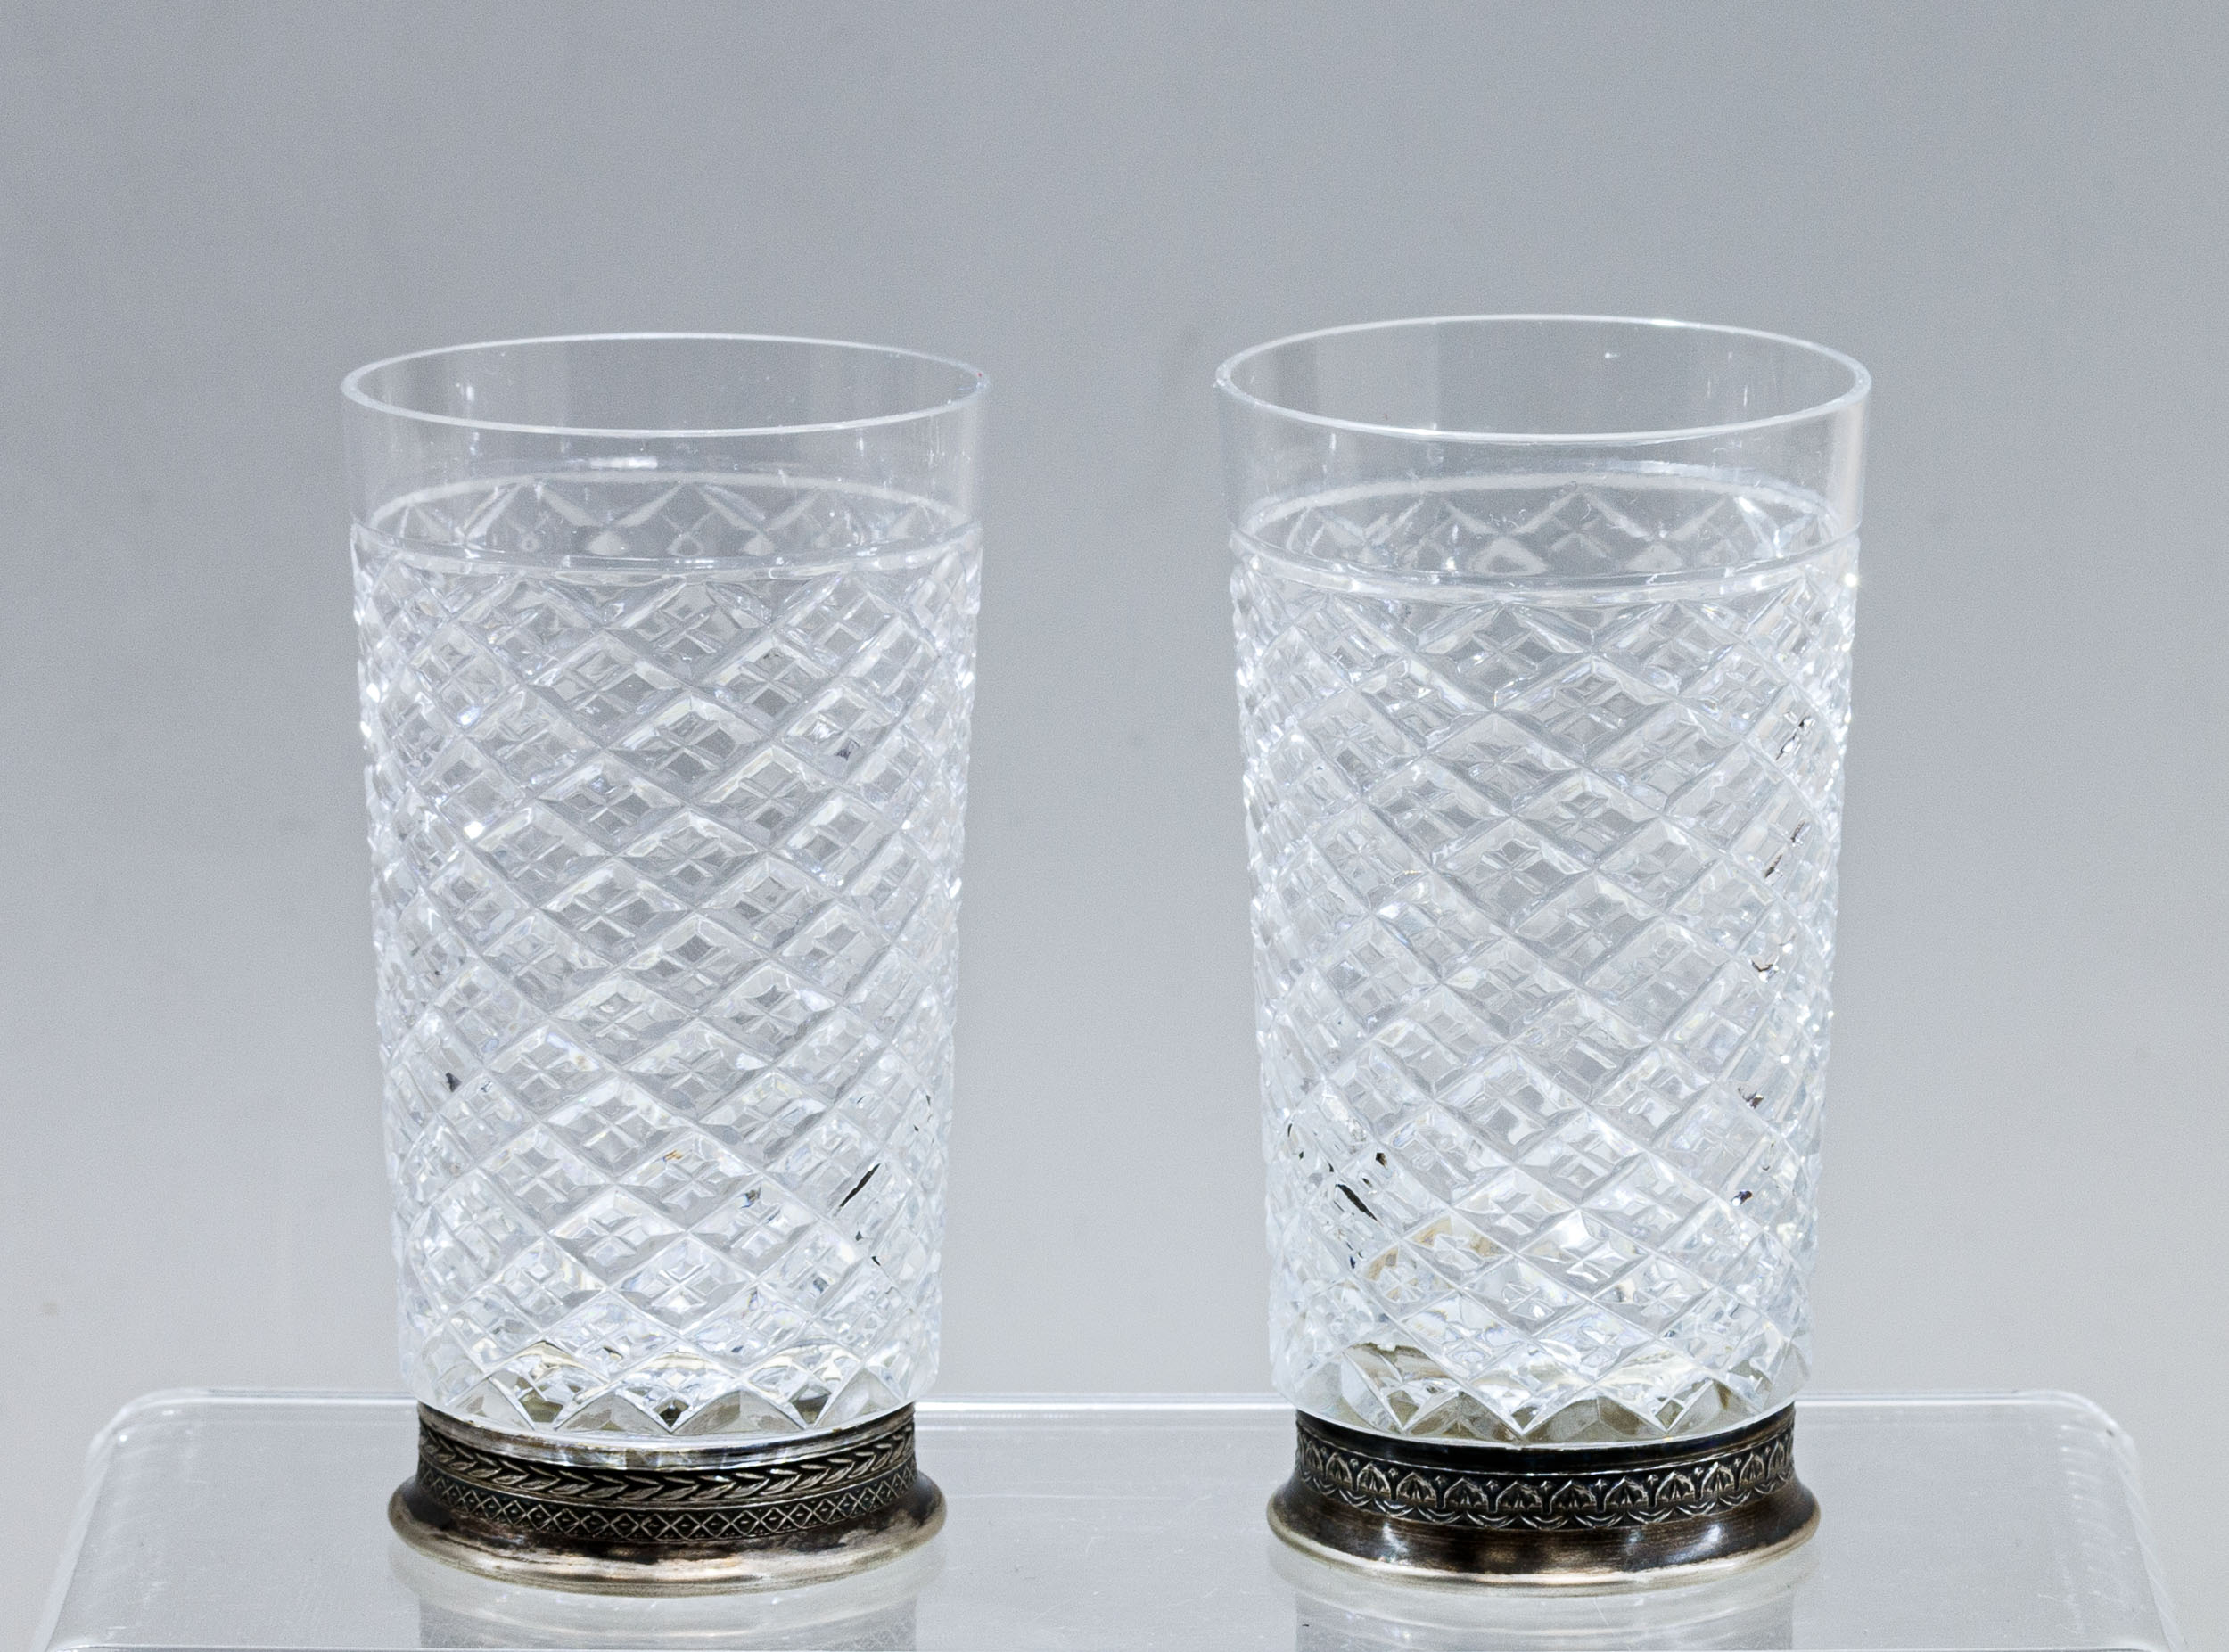 Два хрустальных стакана на серебряных основаниях.